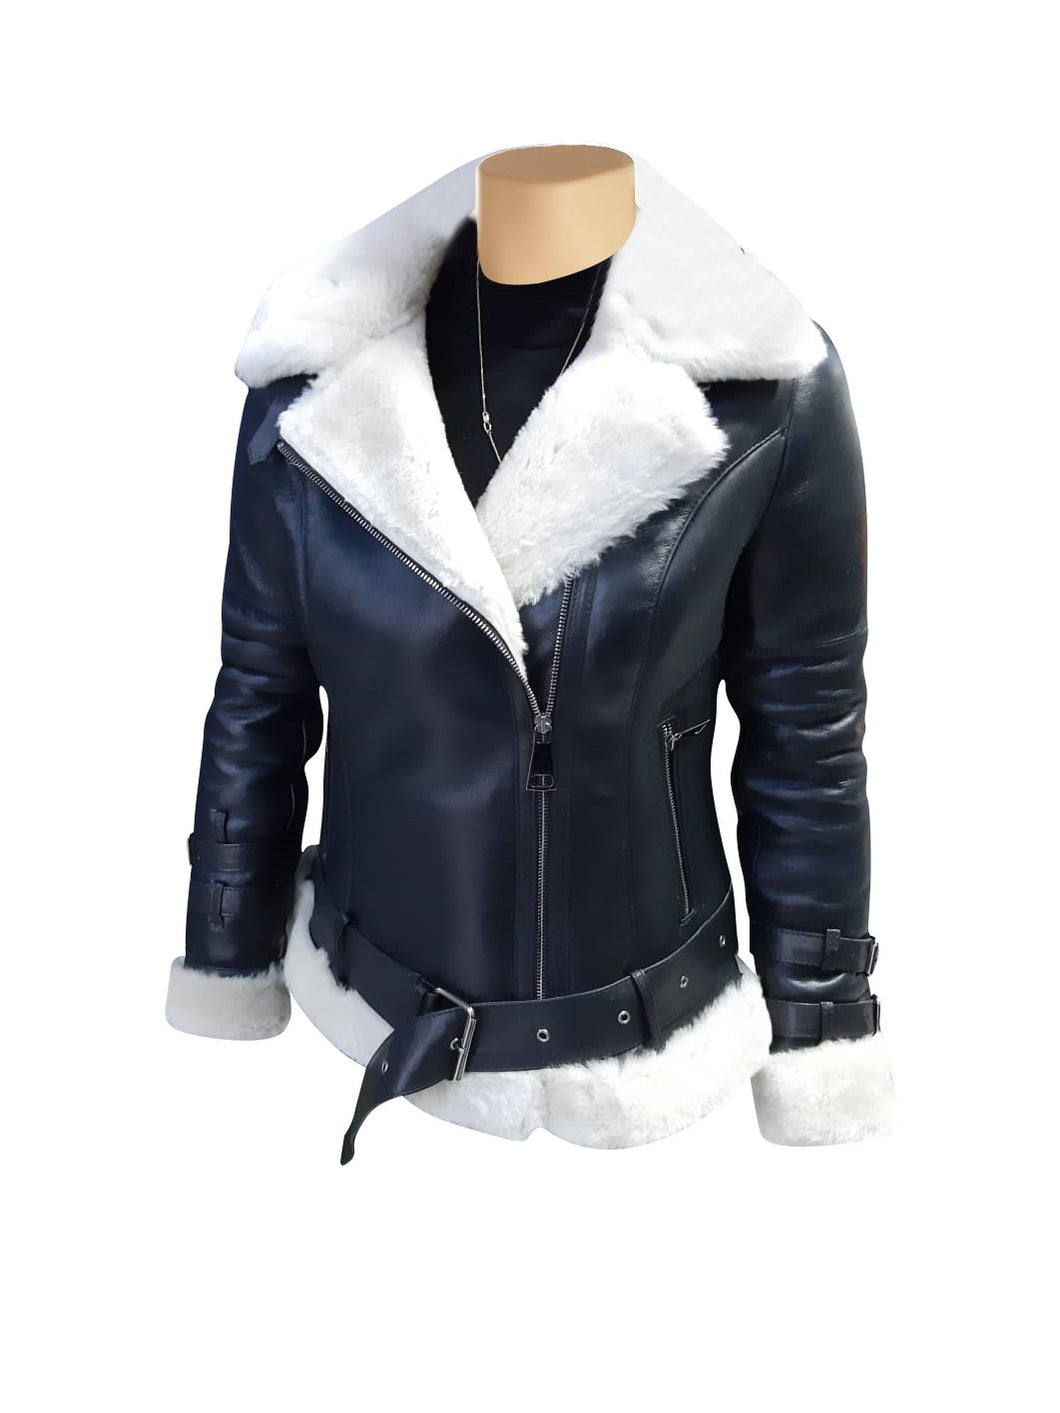 Jayne's Sheepskin Black and White Biker Shearling Jacket - Shearling leather